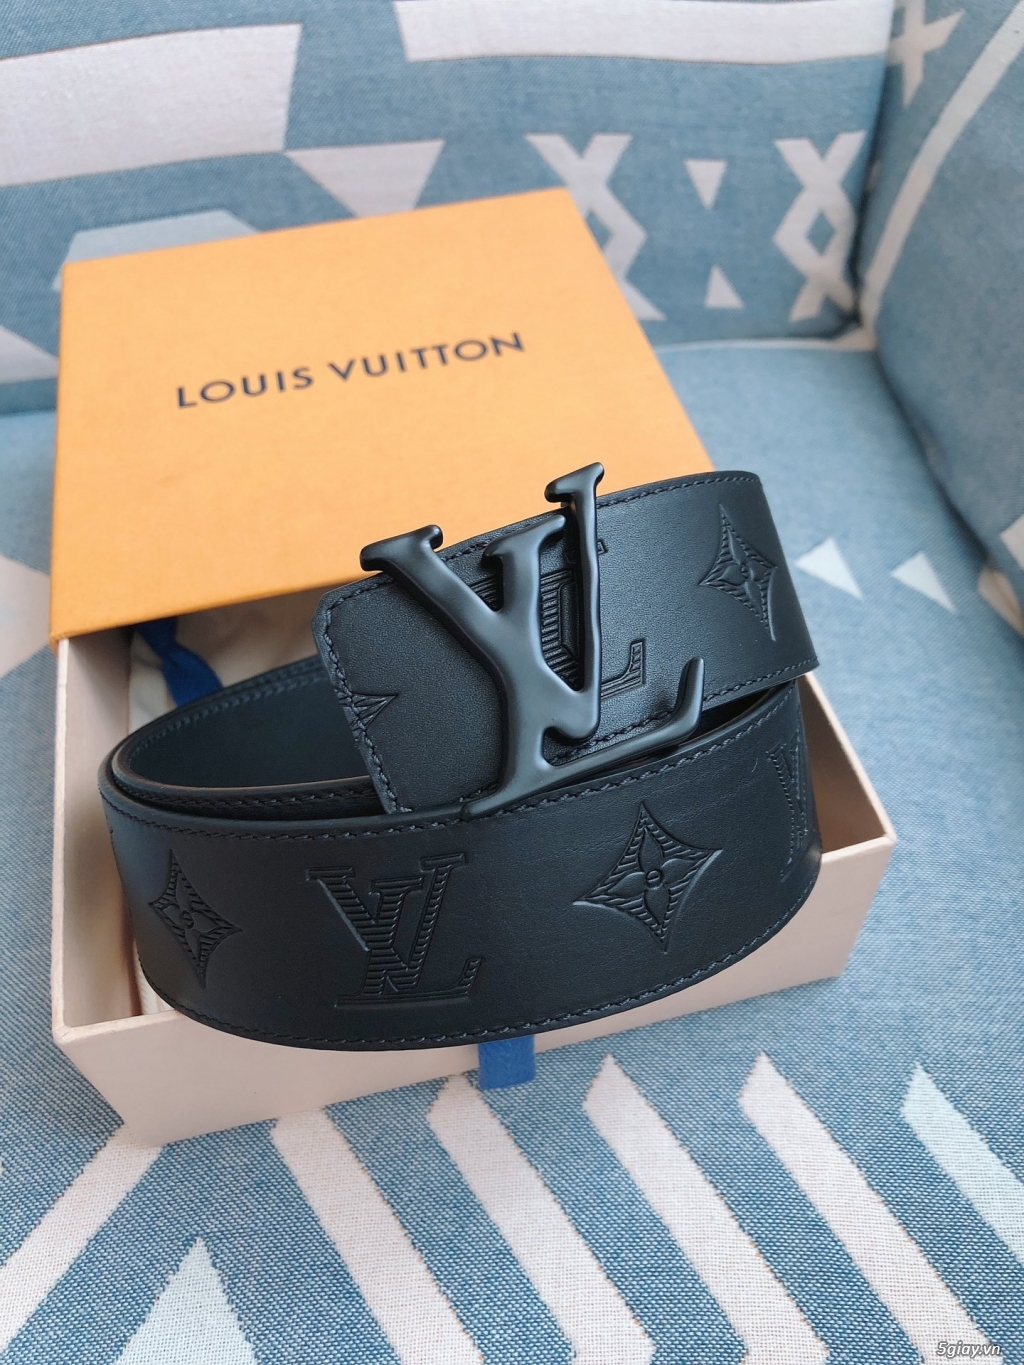 Dây nịt Louis Vuitton hàng fake order ko có sẵn - 10